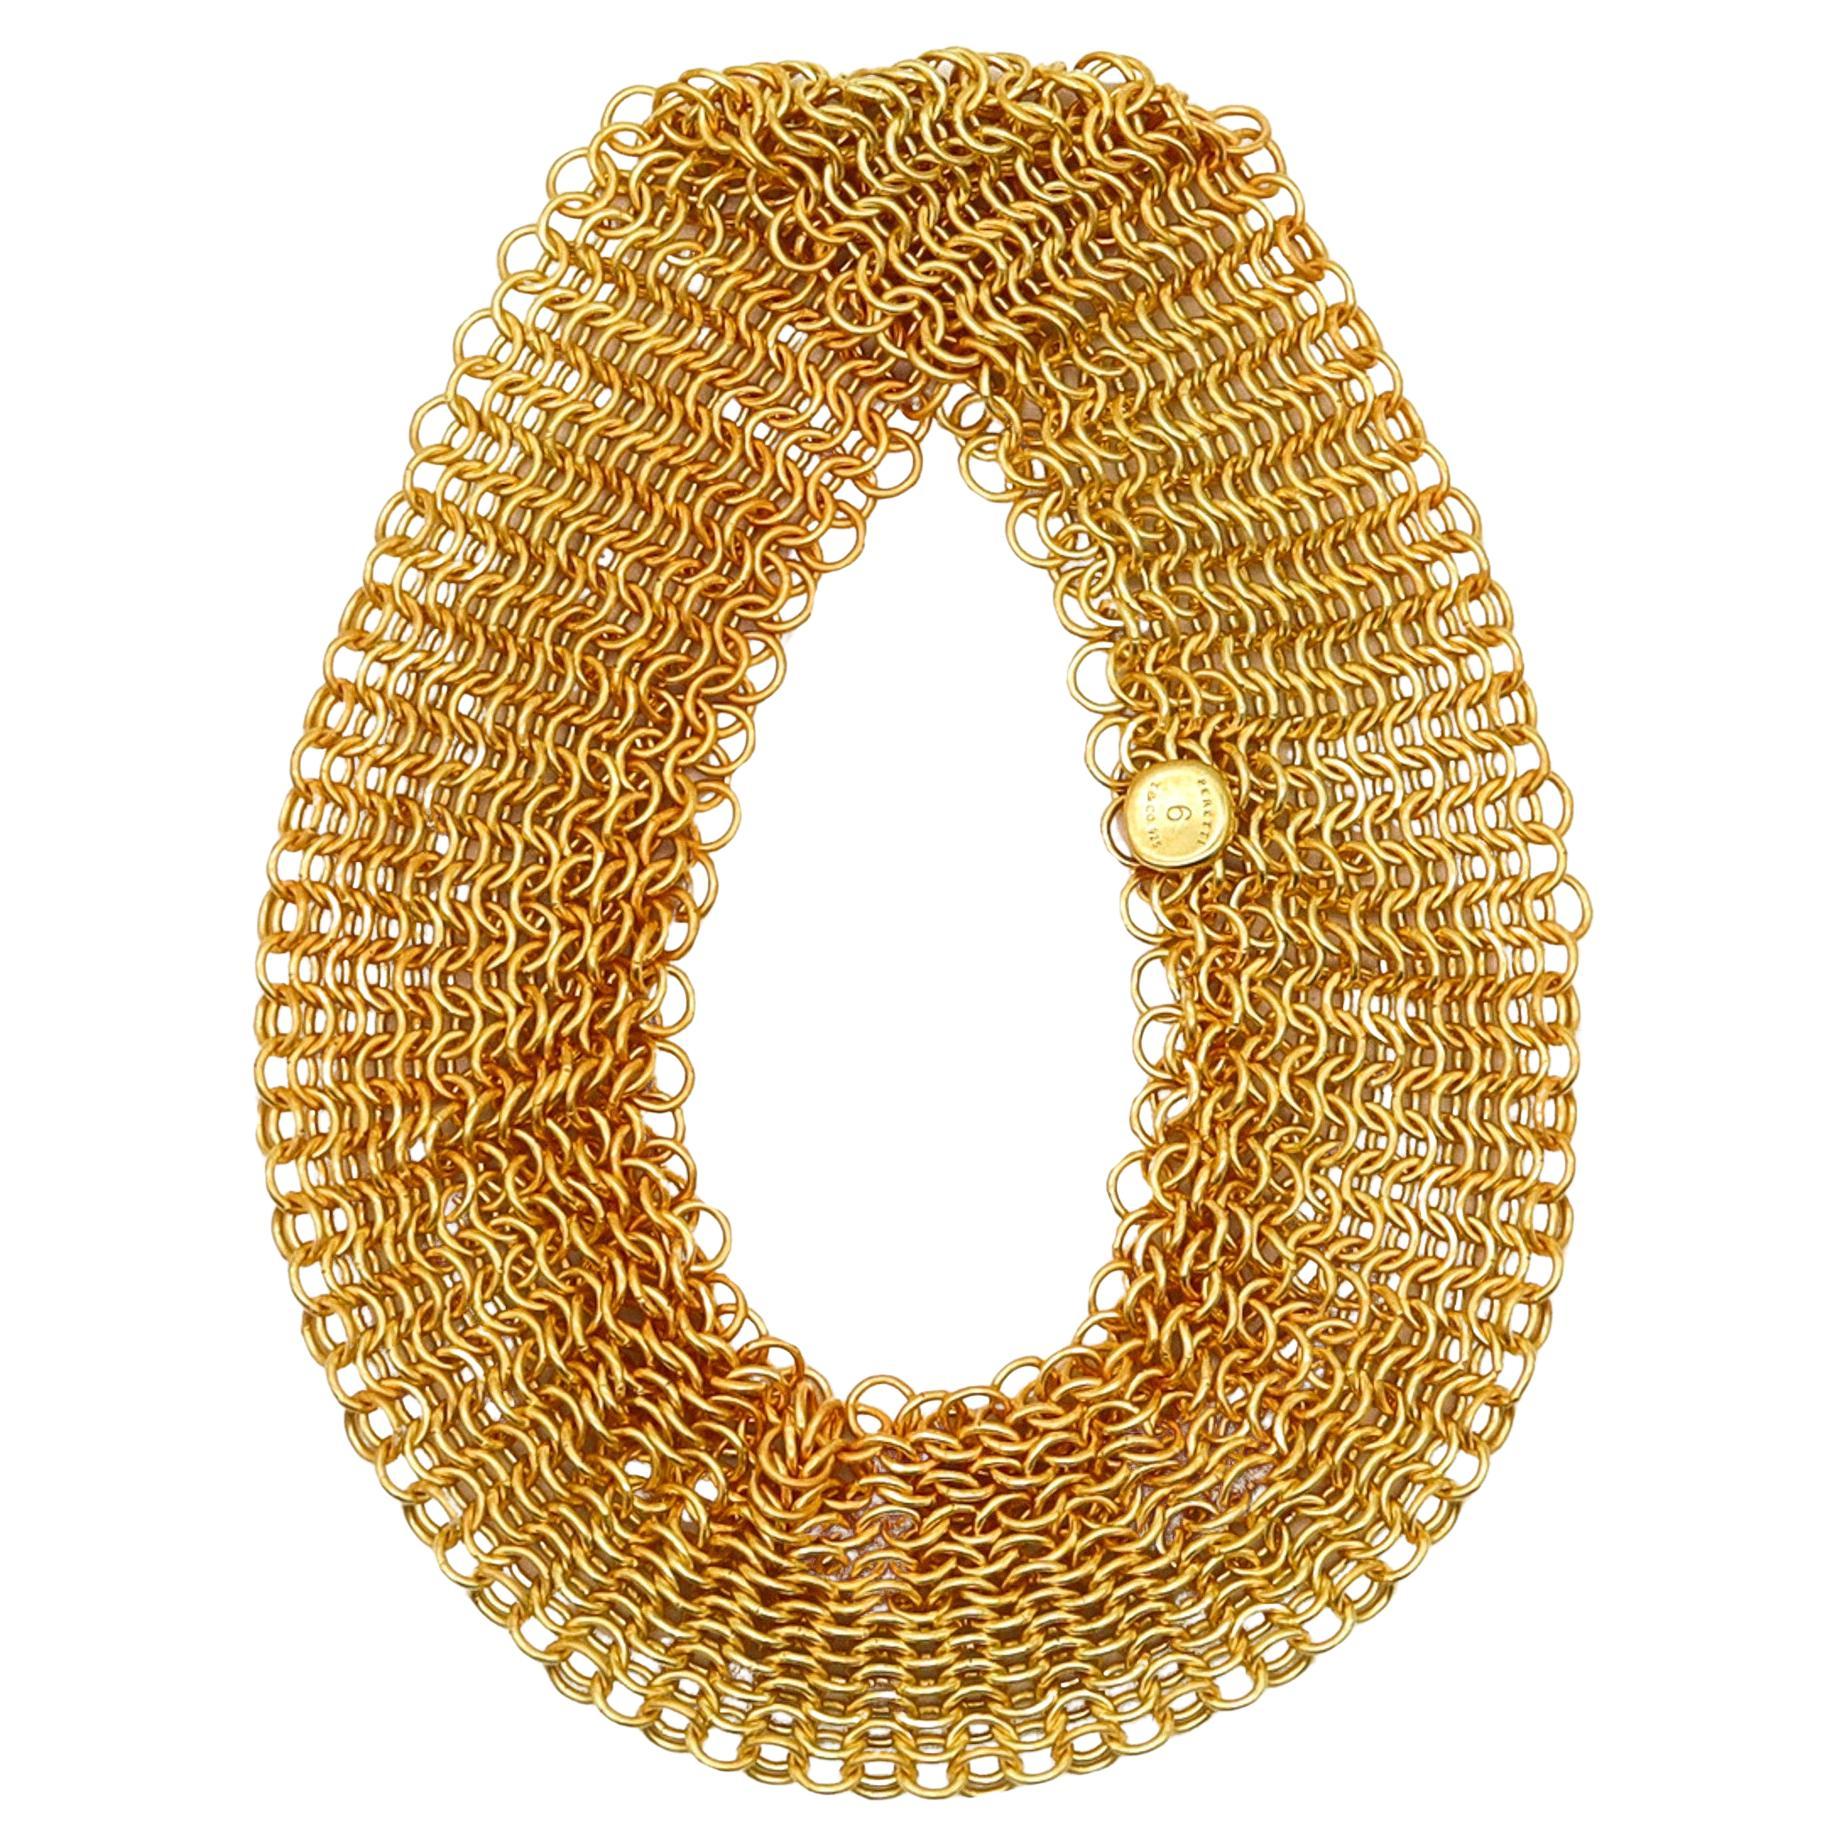 Tiffany & Co. 1982 Elsa Peretti Mesh Bracelet in 18Kt Gold Vermeil Over Sterling